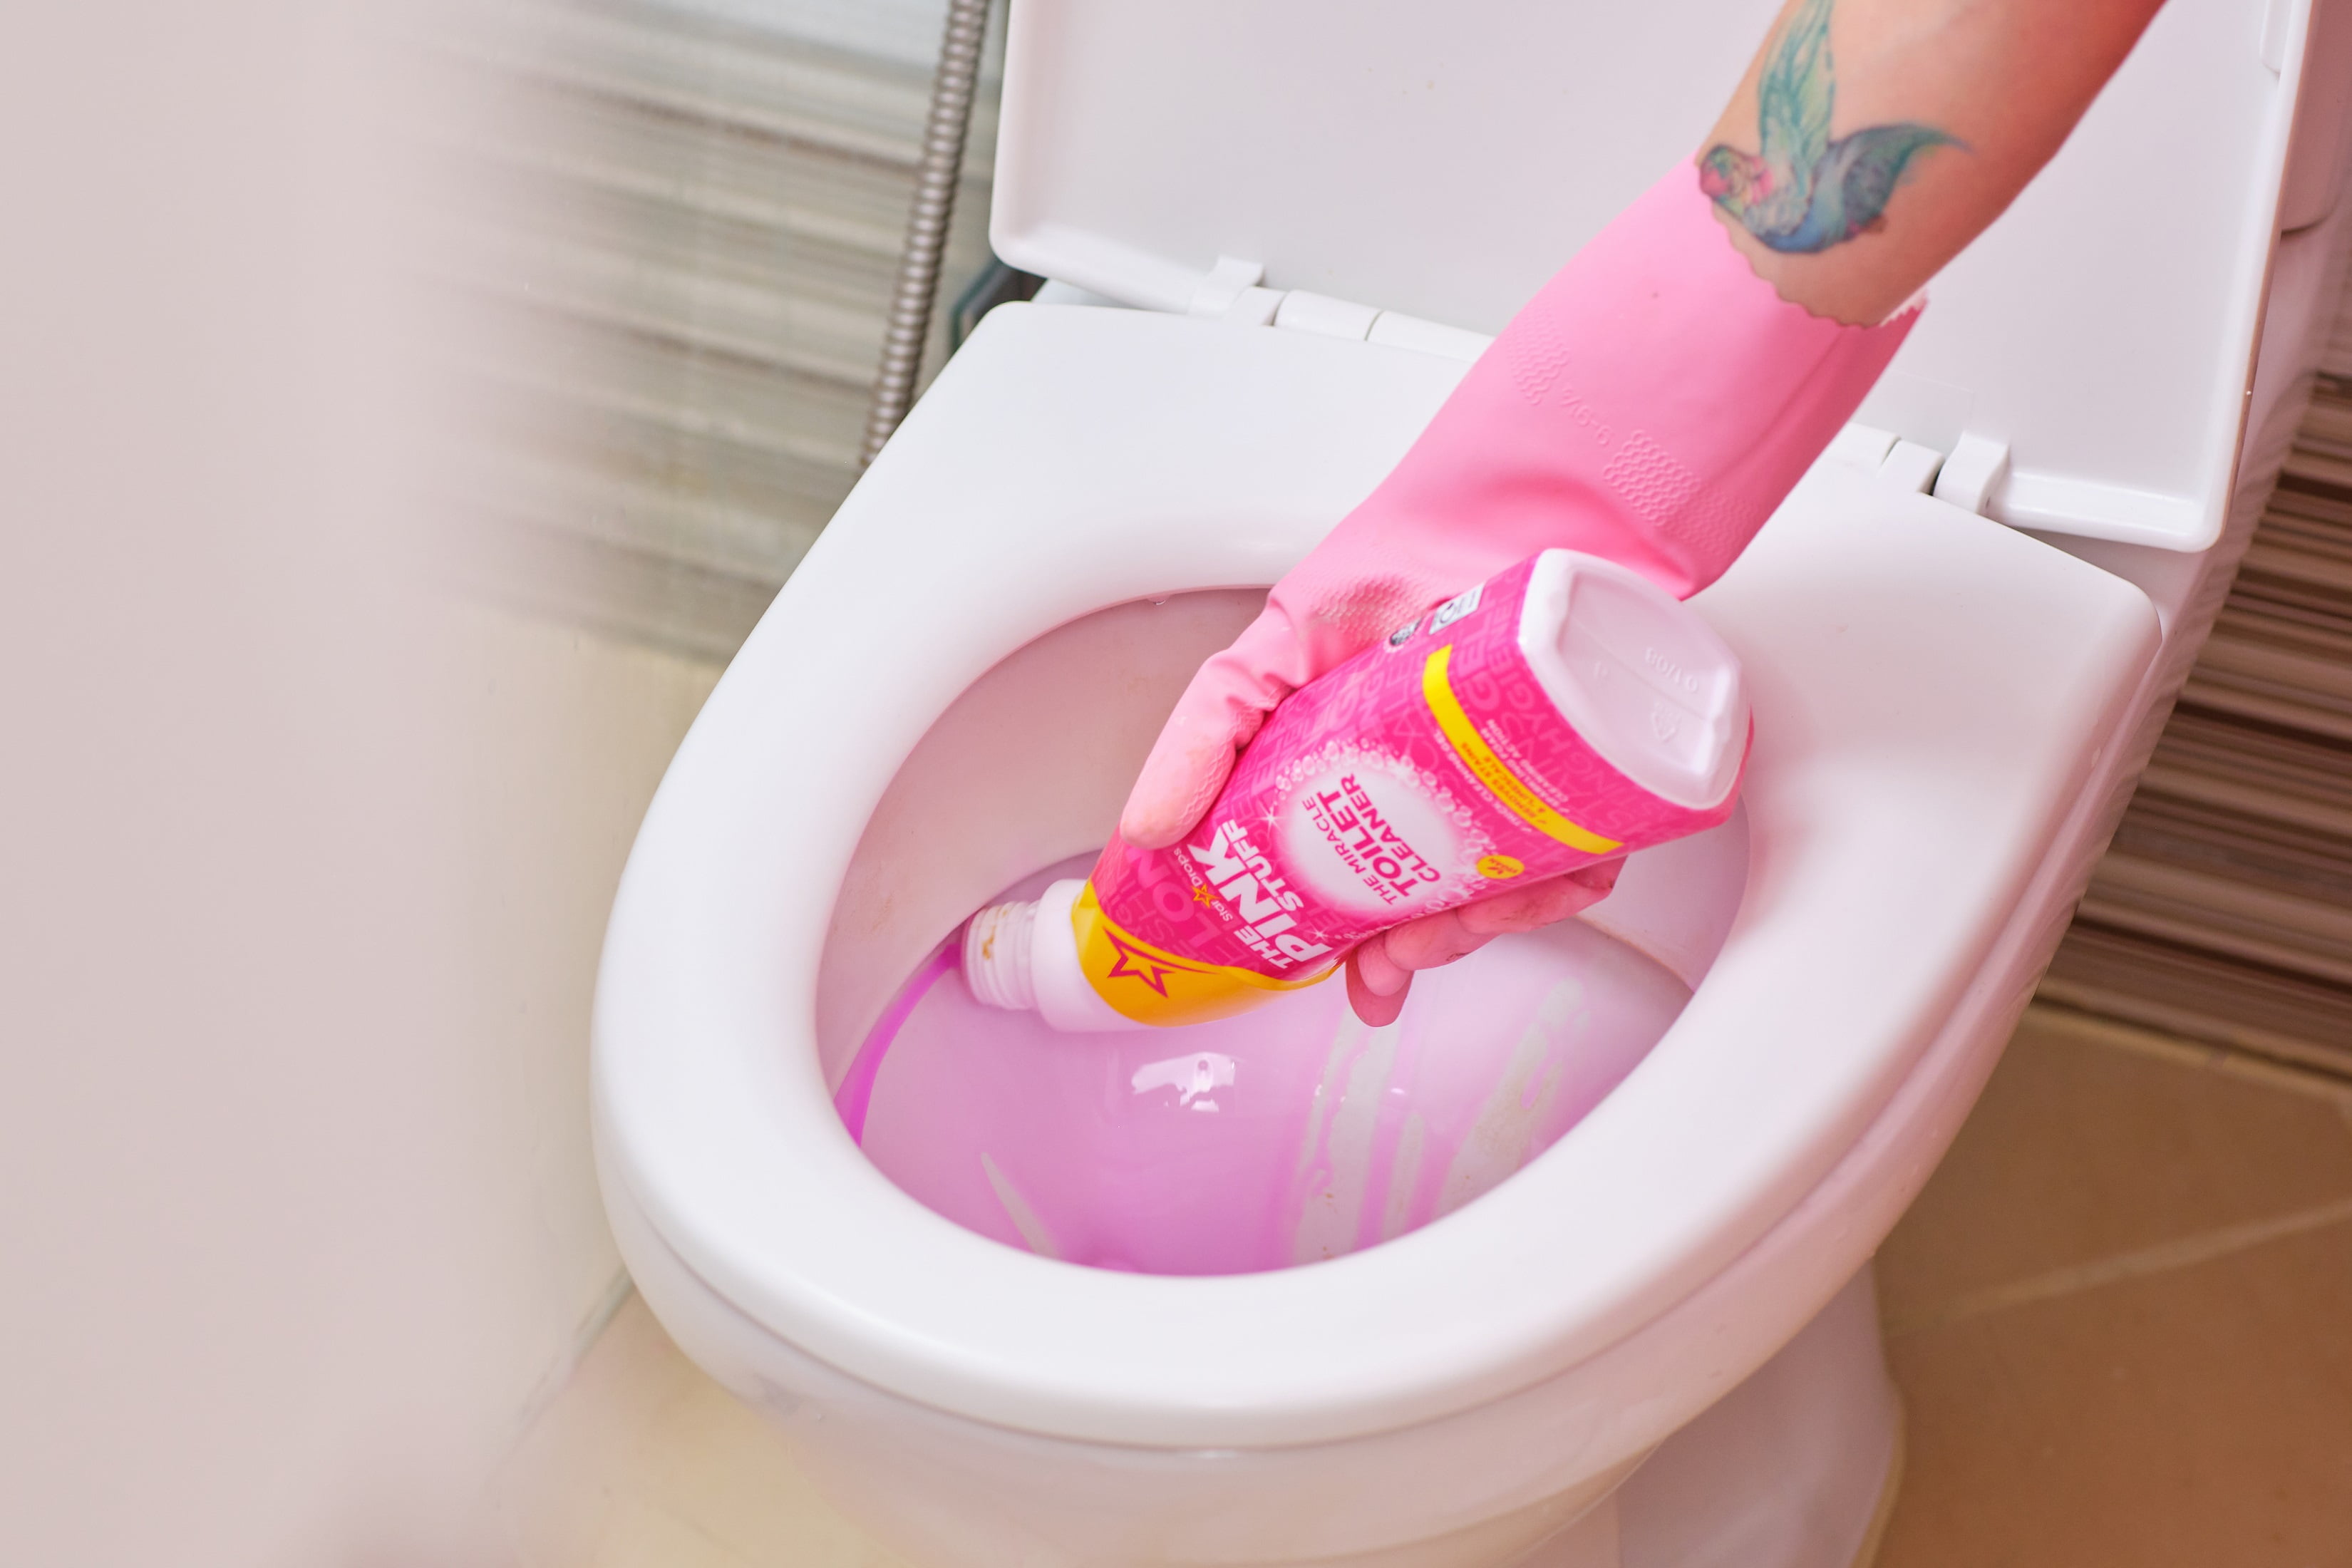 The Pink Stuff Toilet Cleaner Gel - 750ml